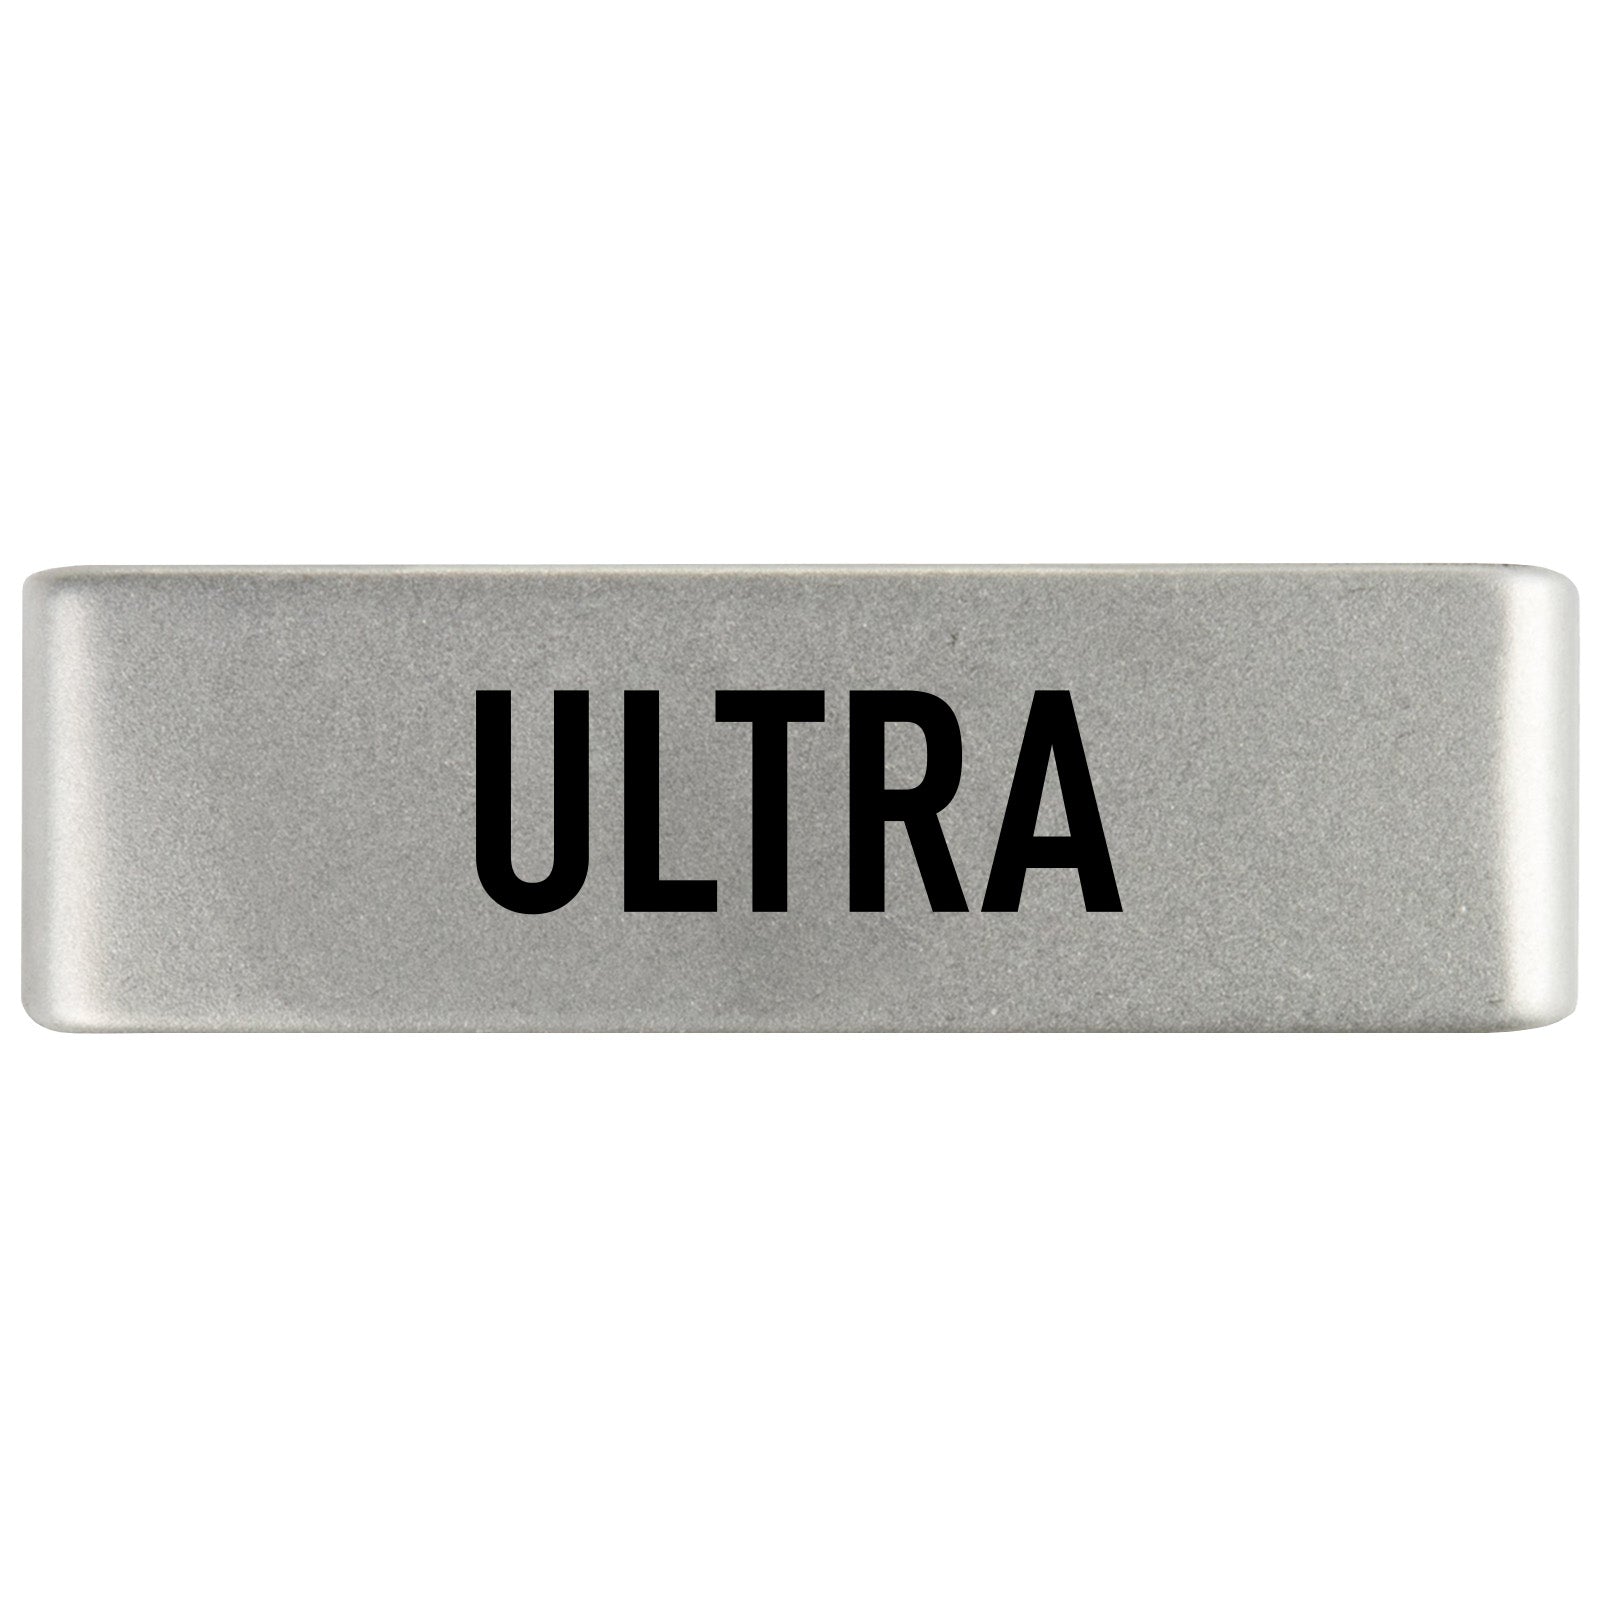 Ultra Badge Badge 19mm - ROAD iD